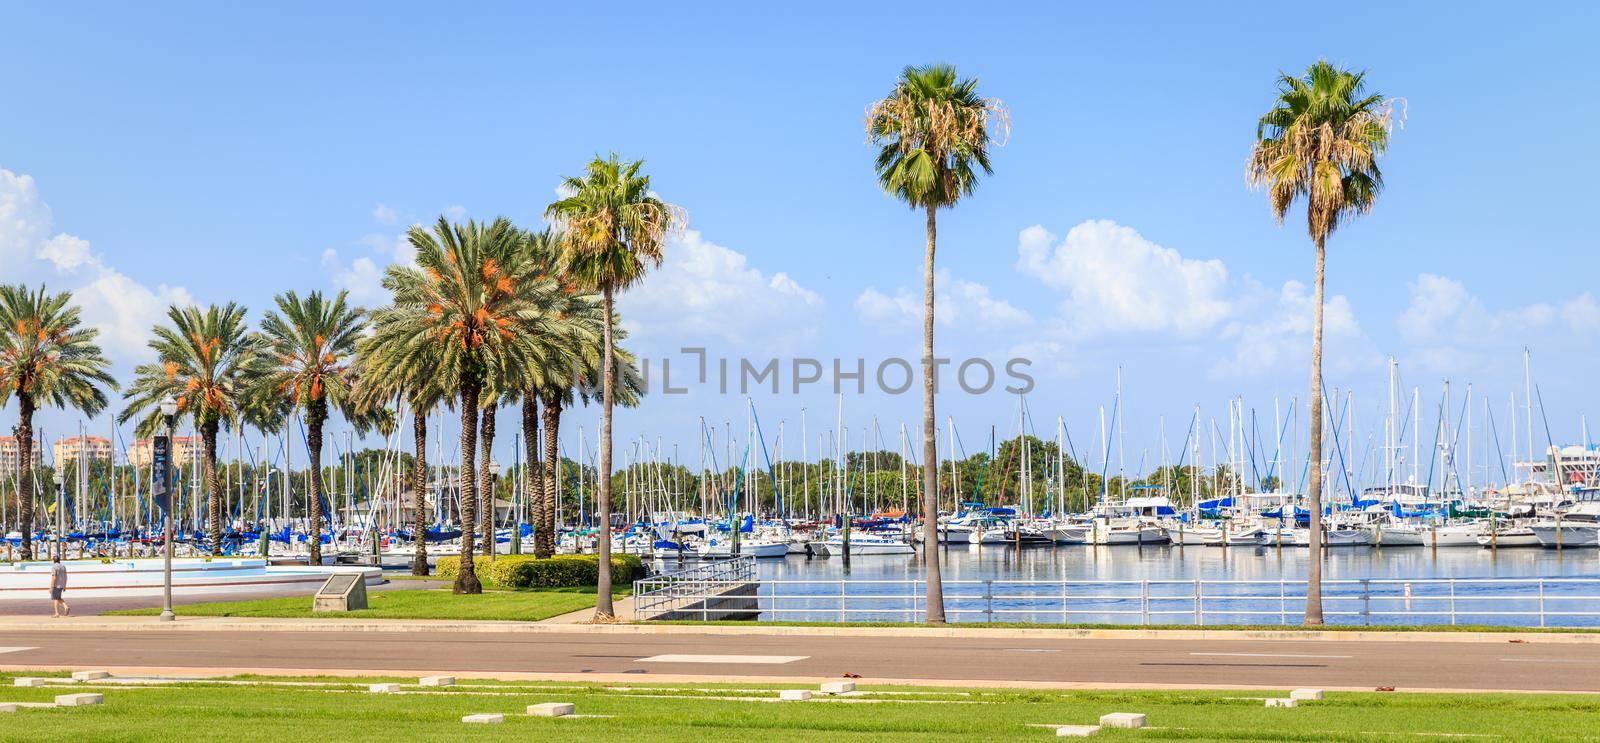 ST. PETERSBURG, FLORIDA - SEPTEMBER 2: Bay with yachts on September 02, 2014 in St. Petersburg, FL.